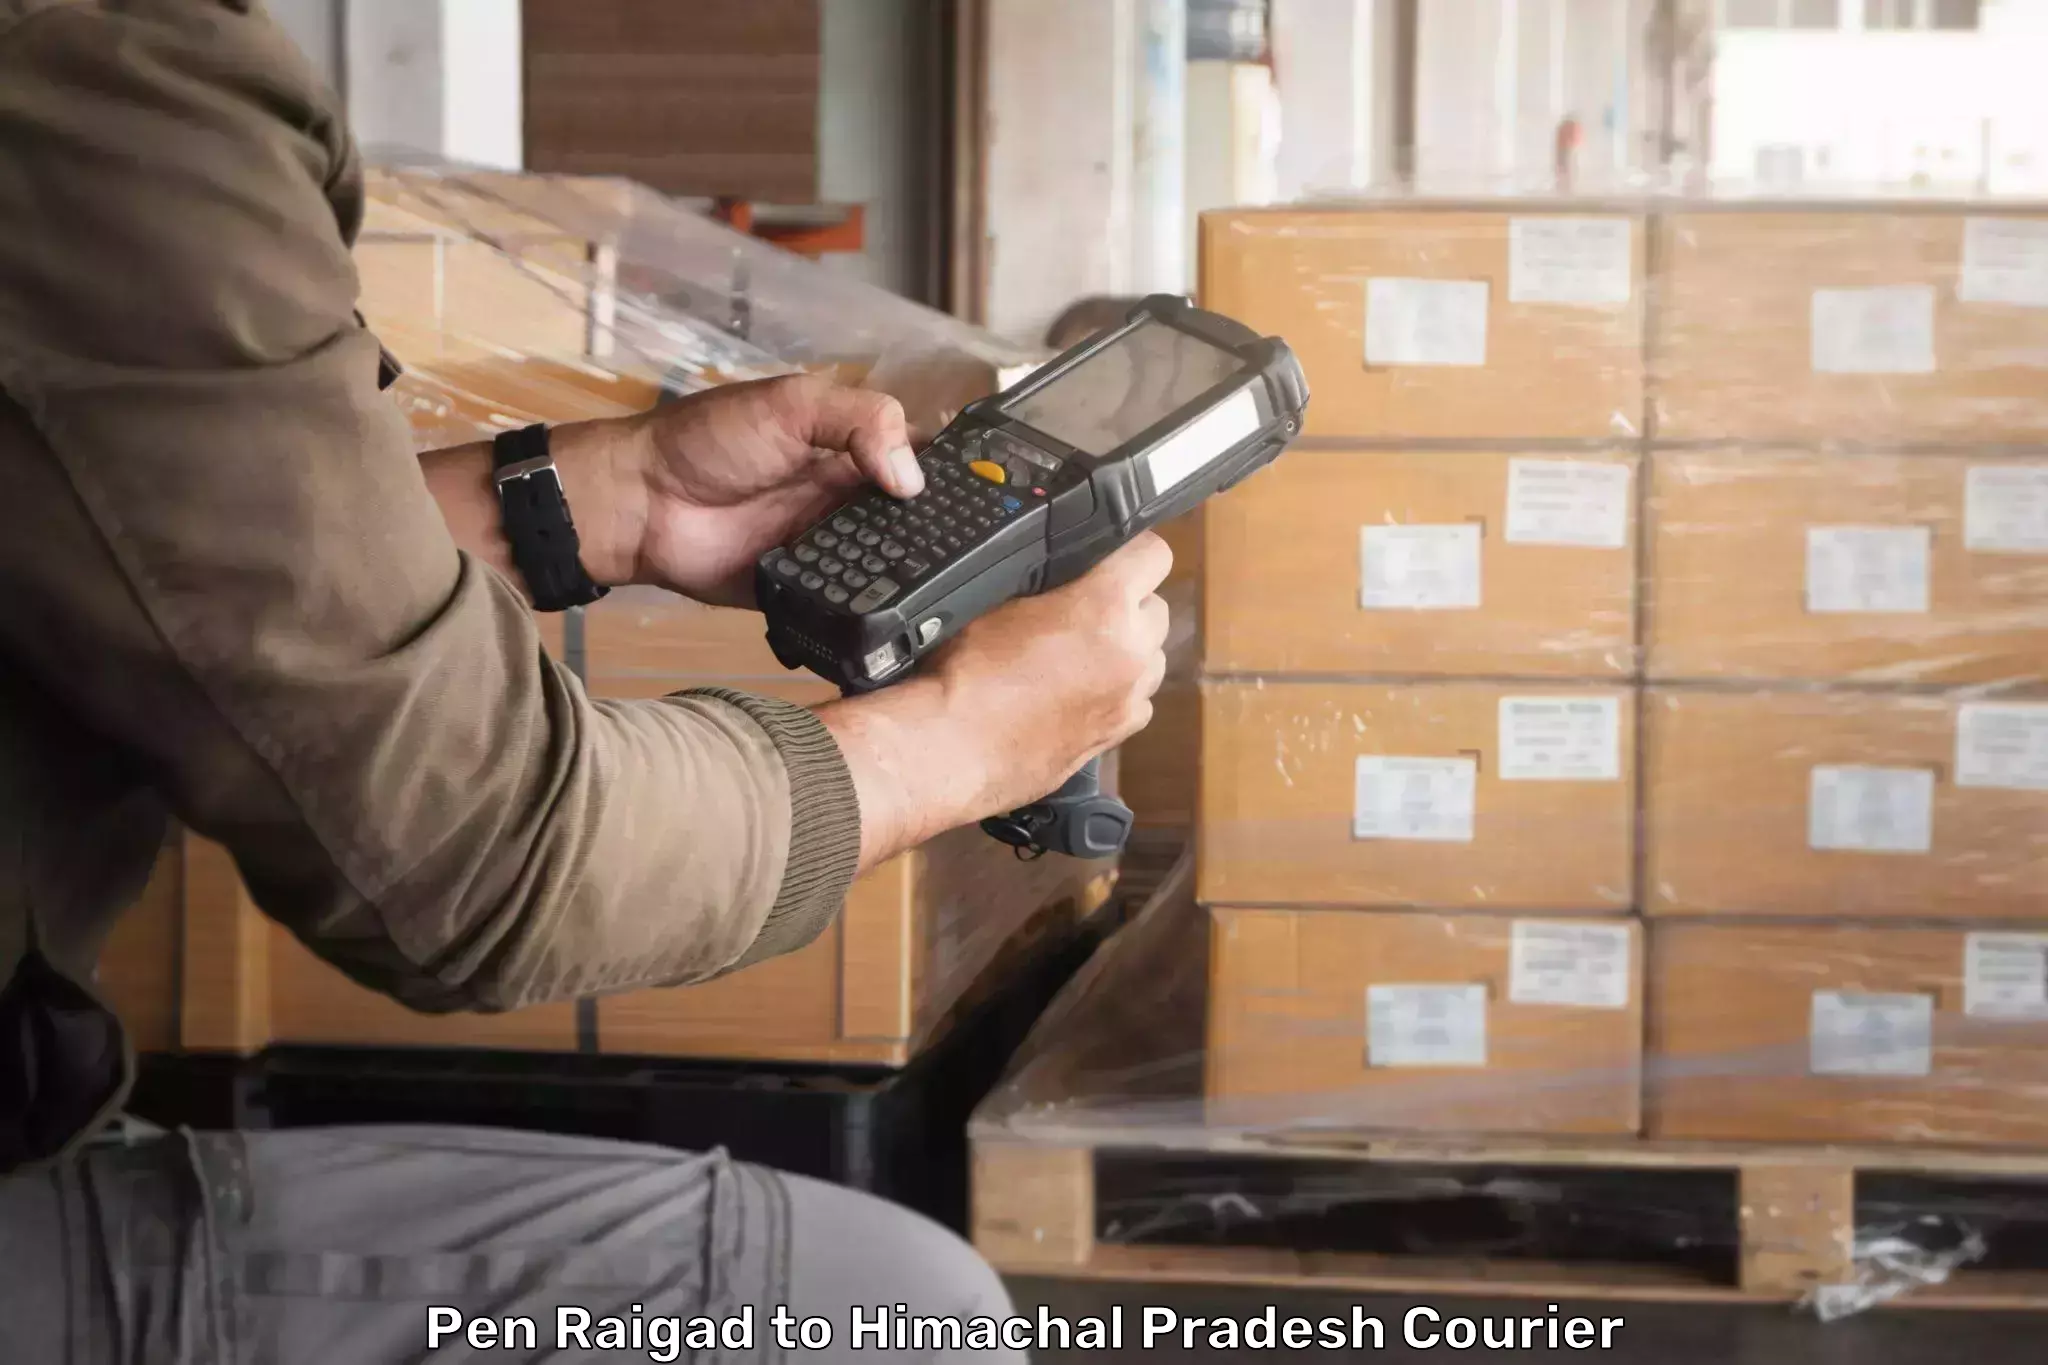 Quick courier services Pen Raigad to Manali